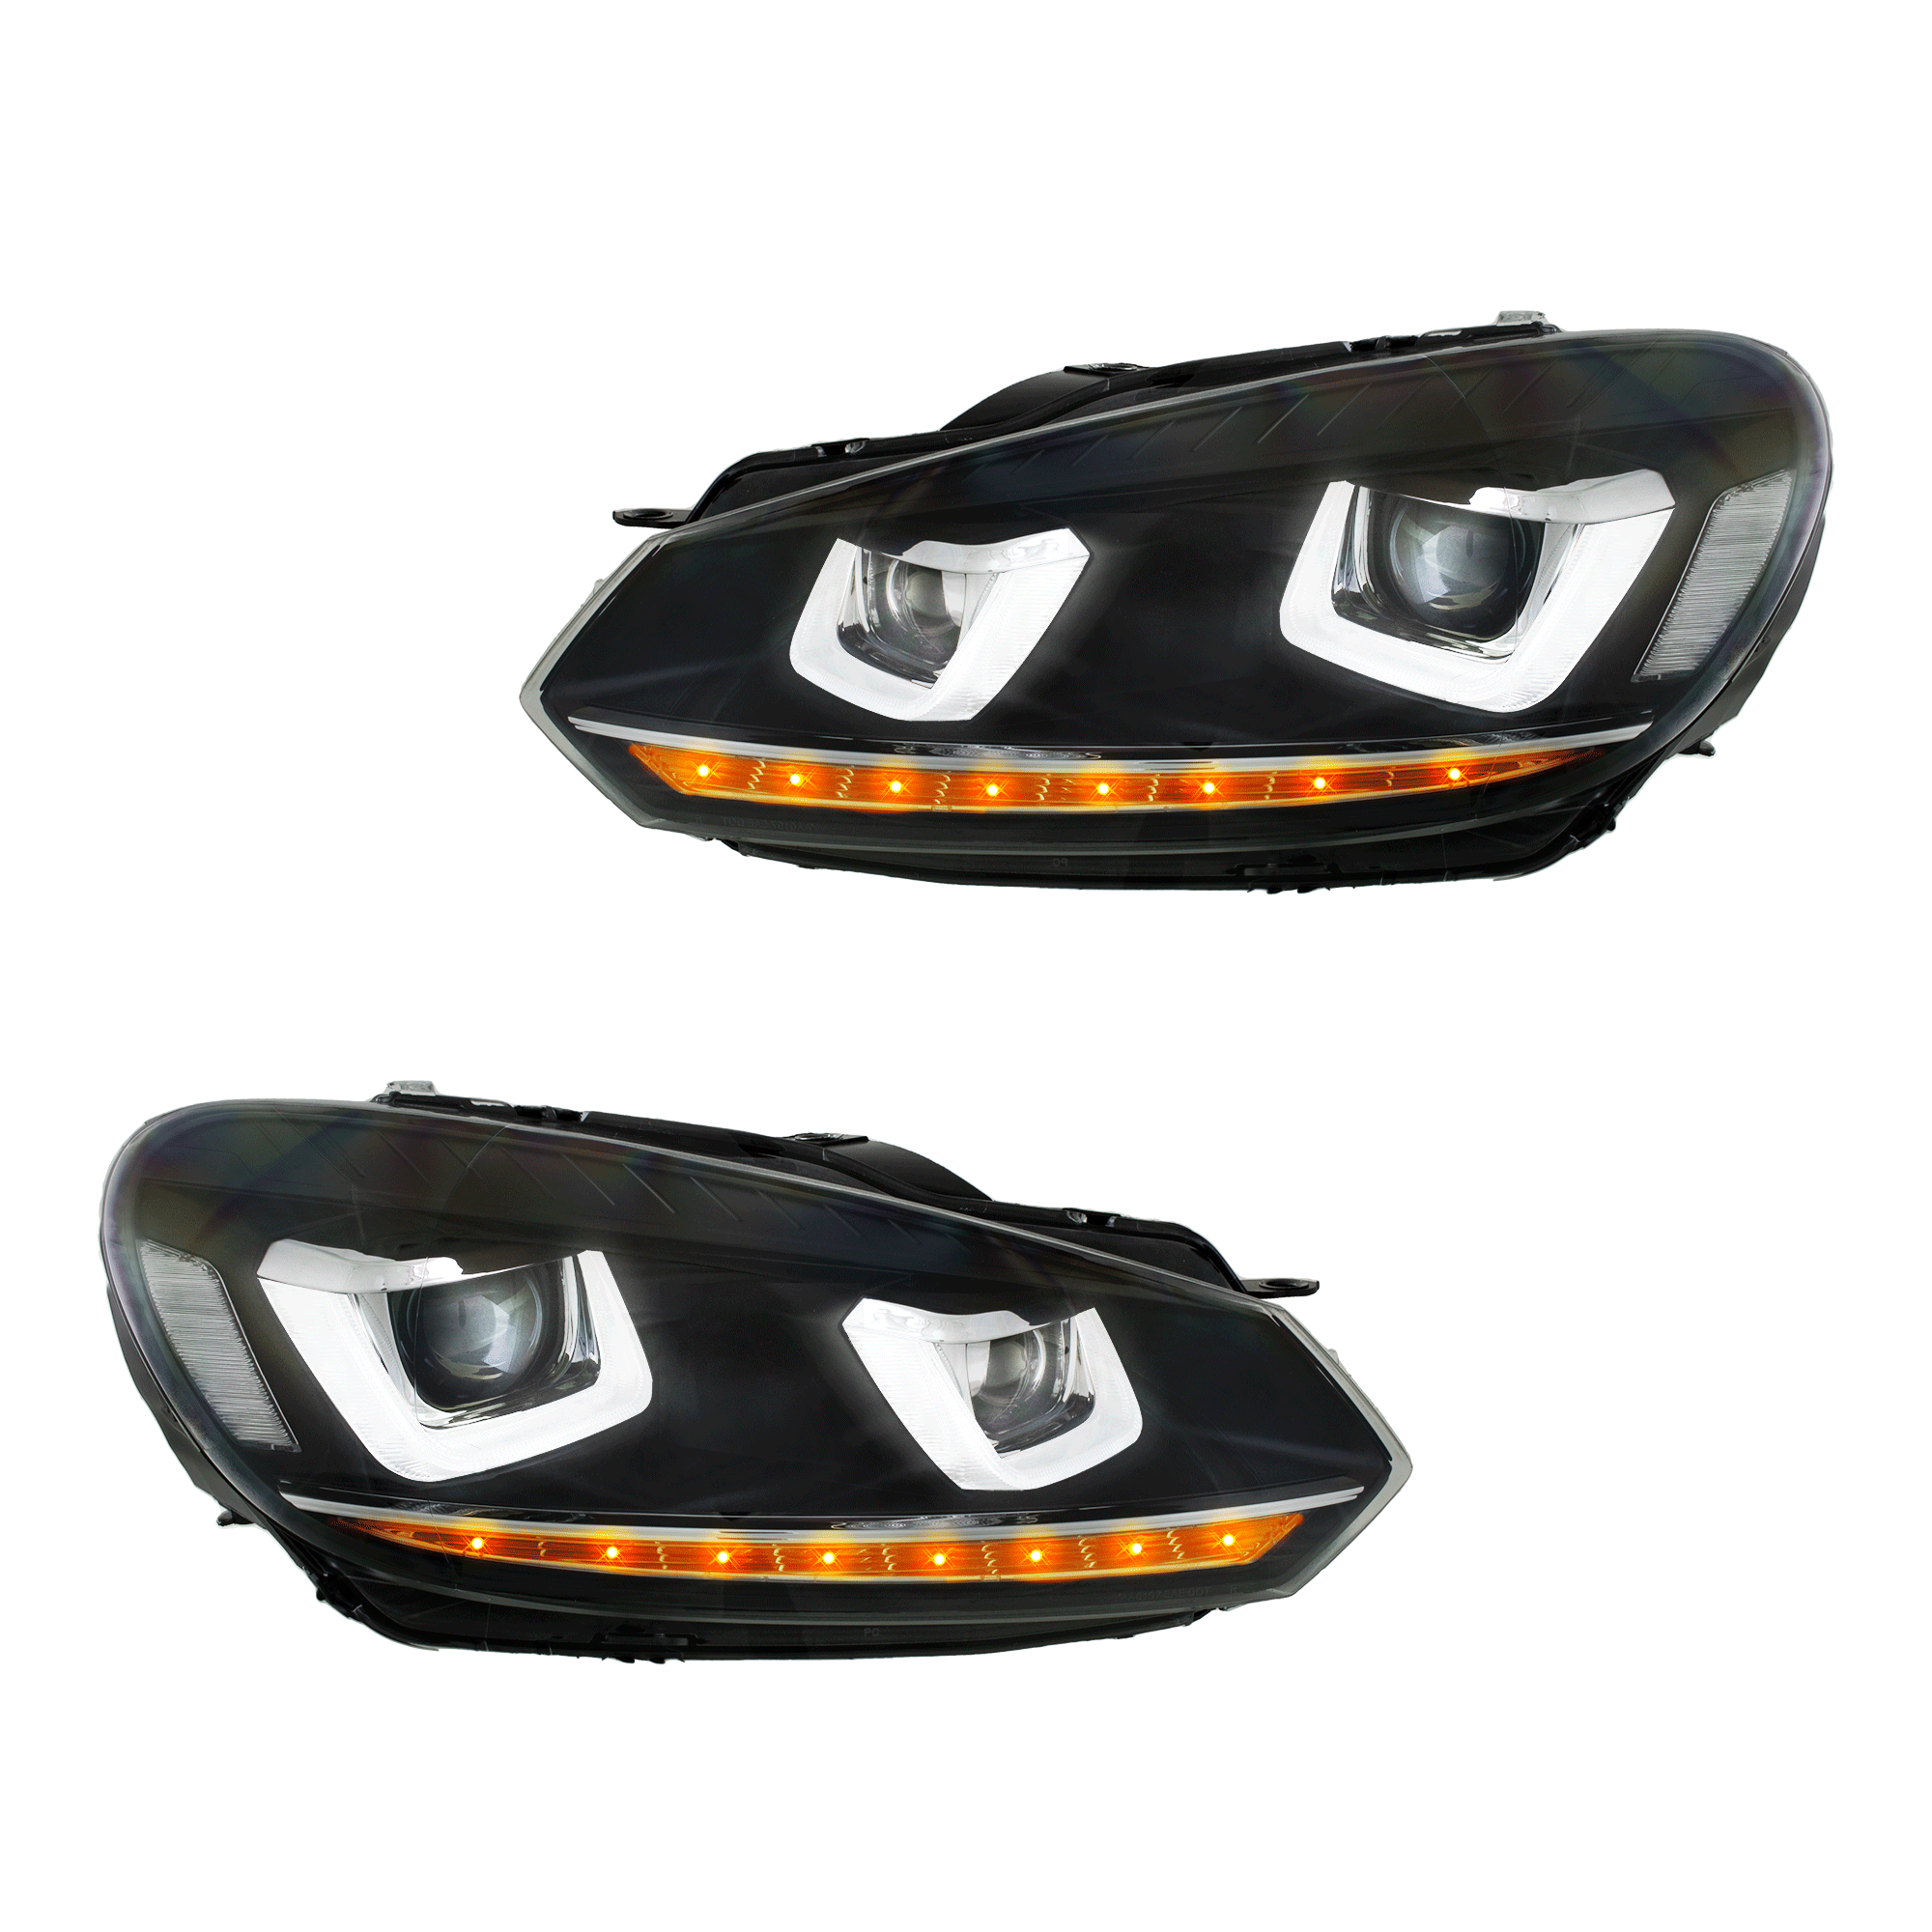 LED Scheinwerfer Set dynamisch Blinker inkl. Motoren für VW Golf 6 Bj. 08-13